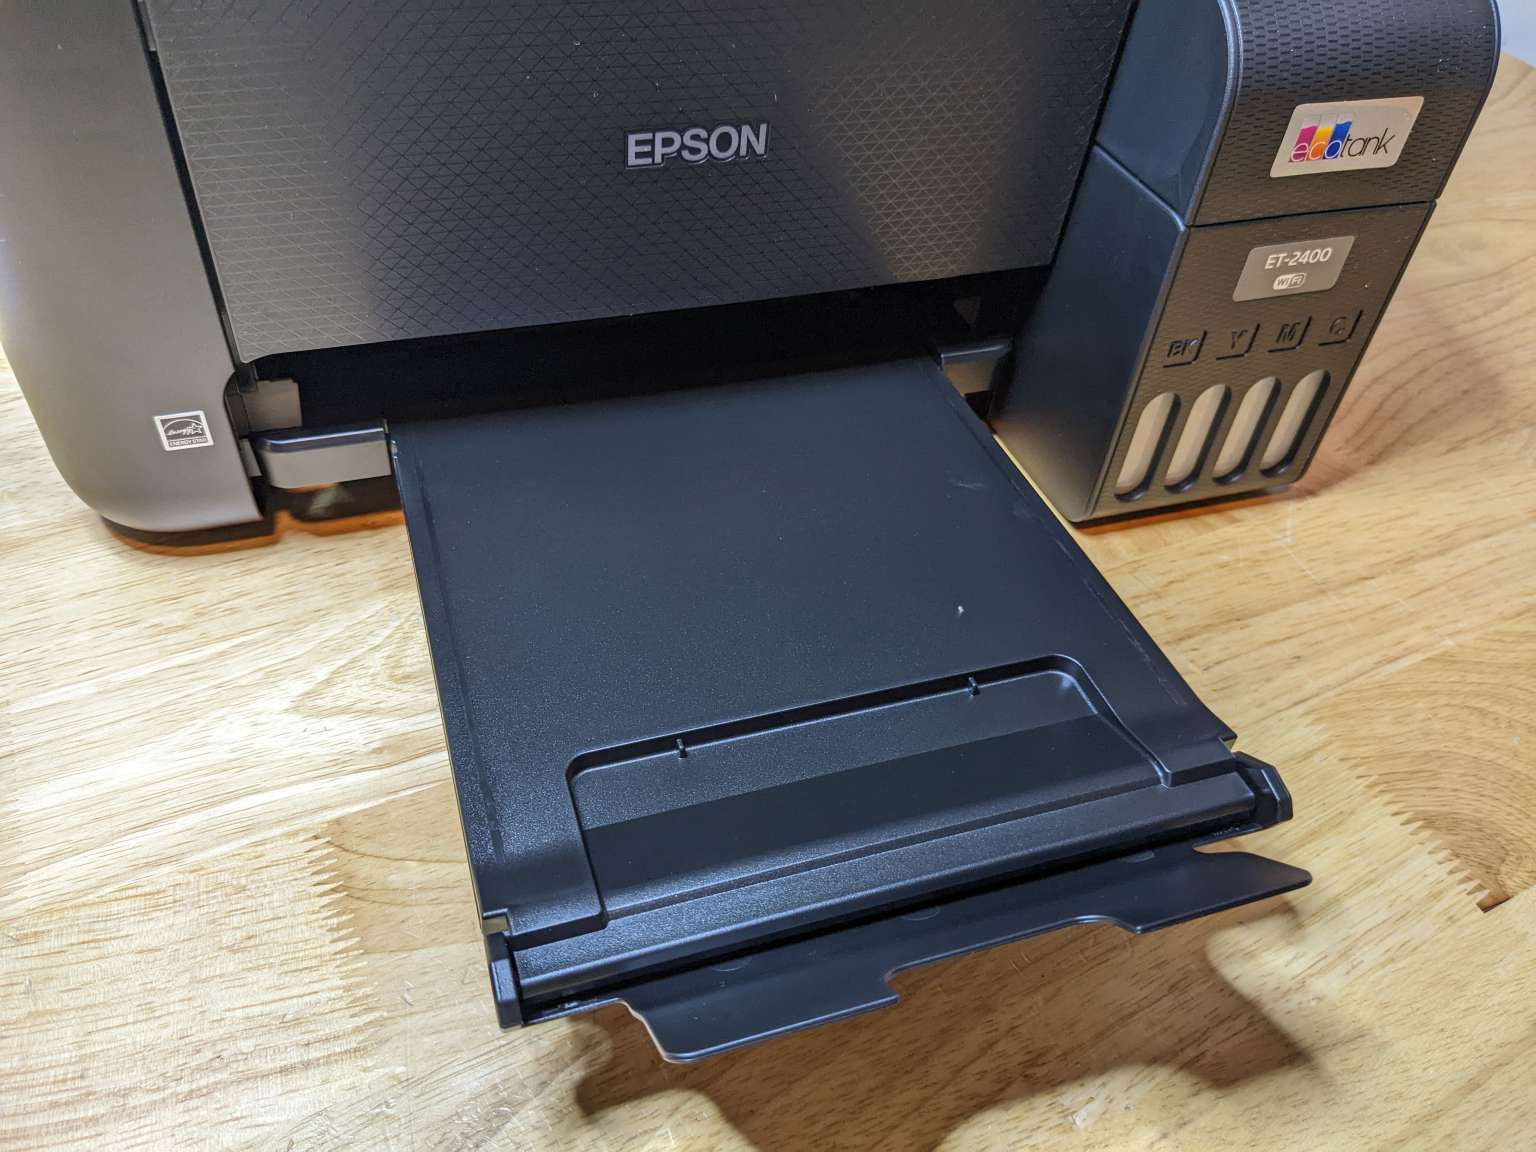 Epson Ecotank Et 2400 Wireless Color Supertank Printer Review Never Buy Ink Cartridges Again 9081